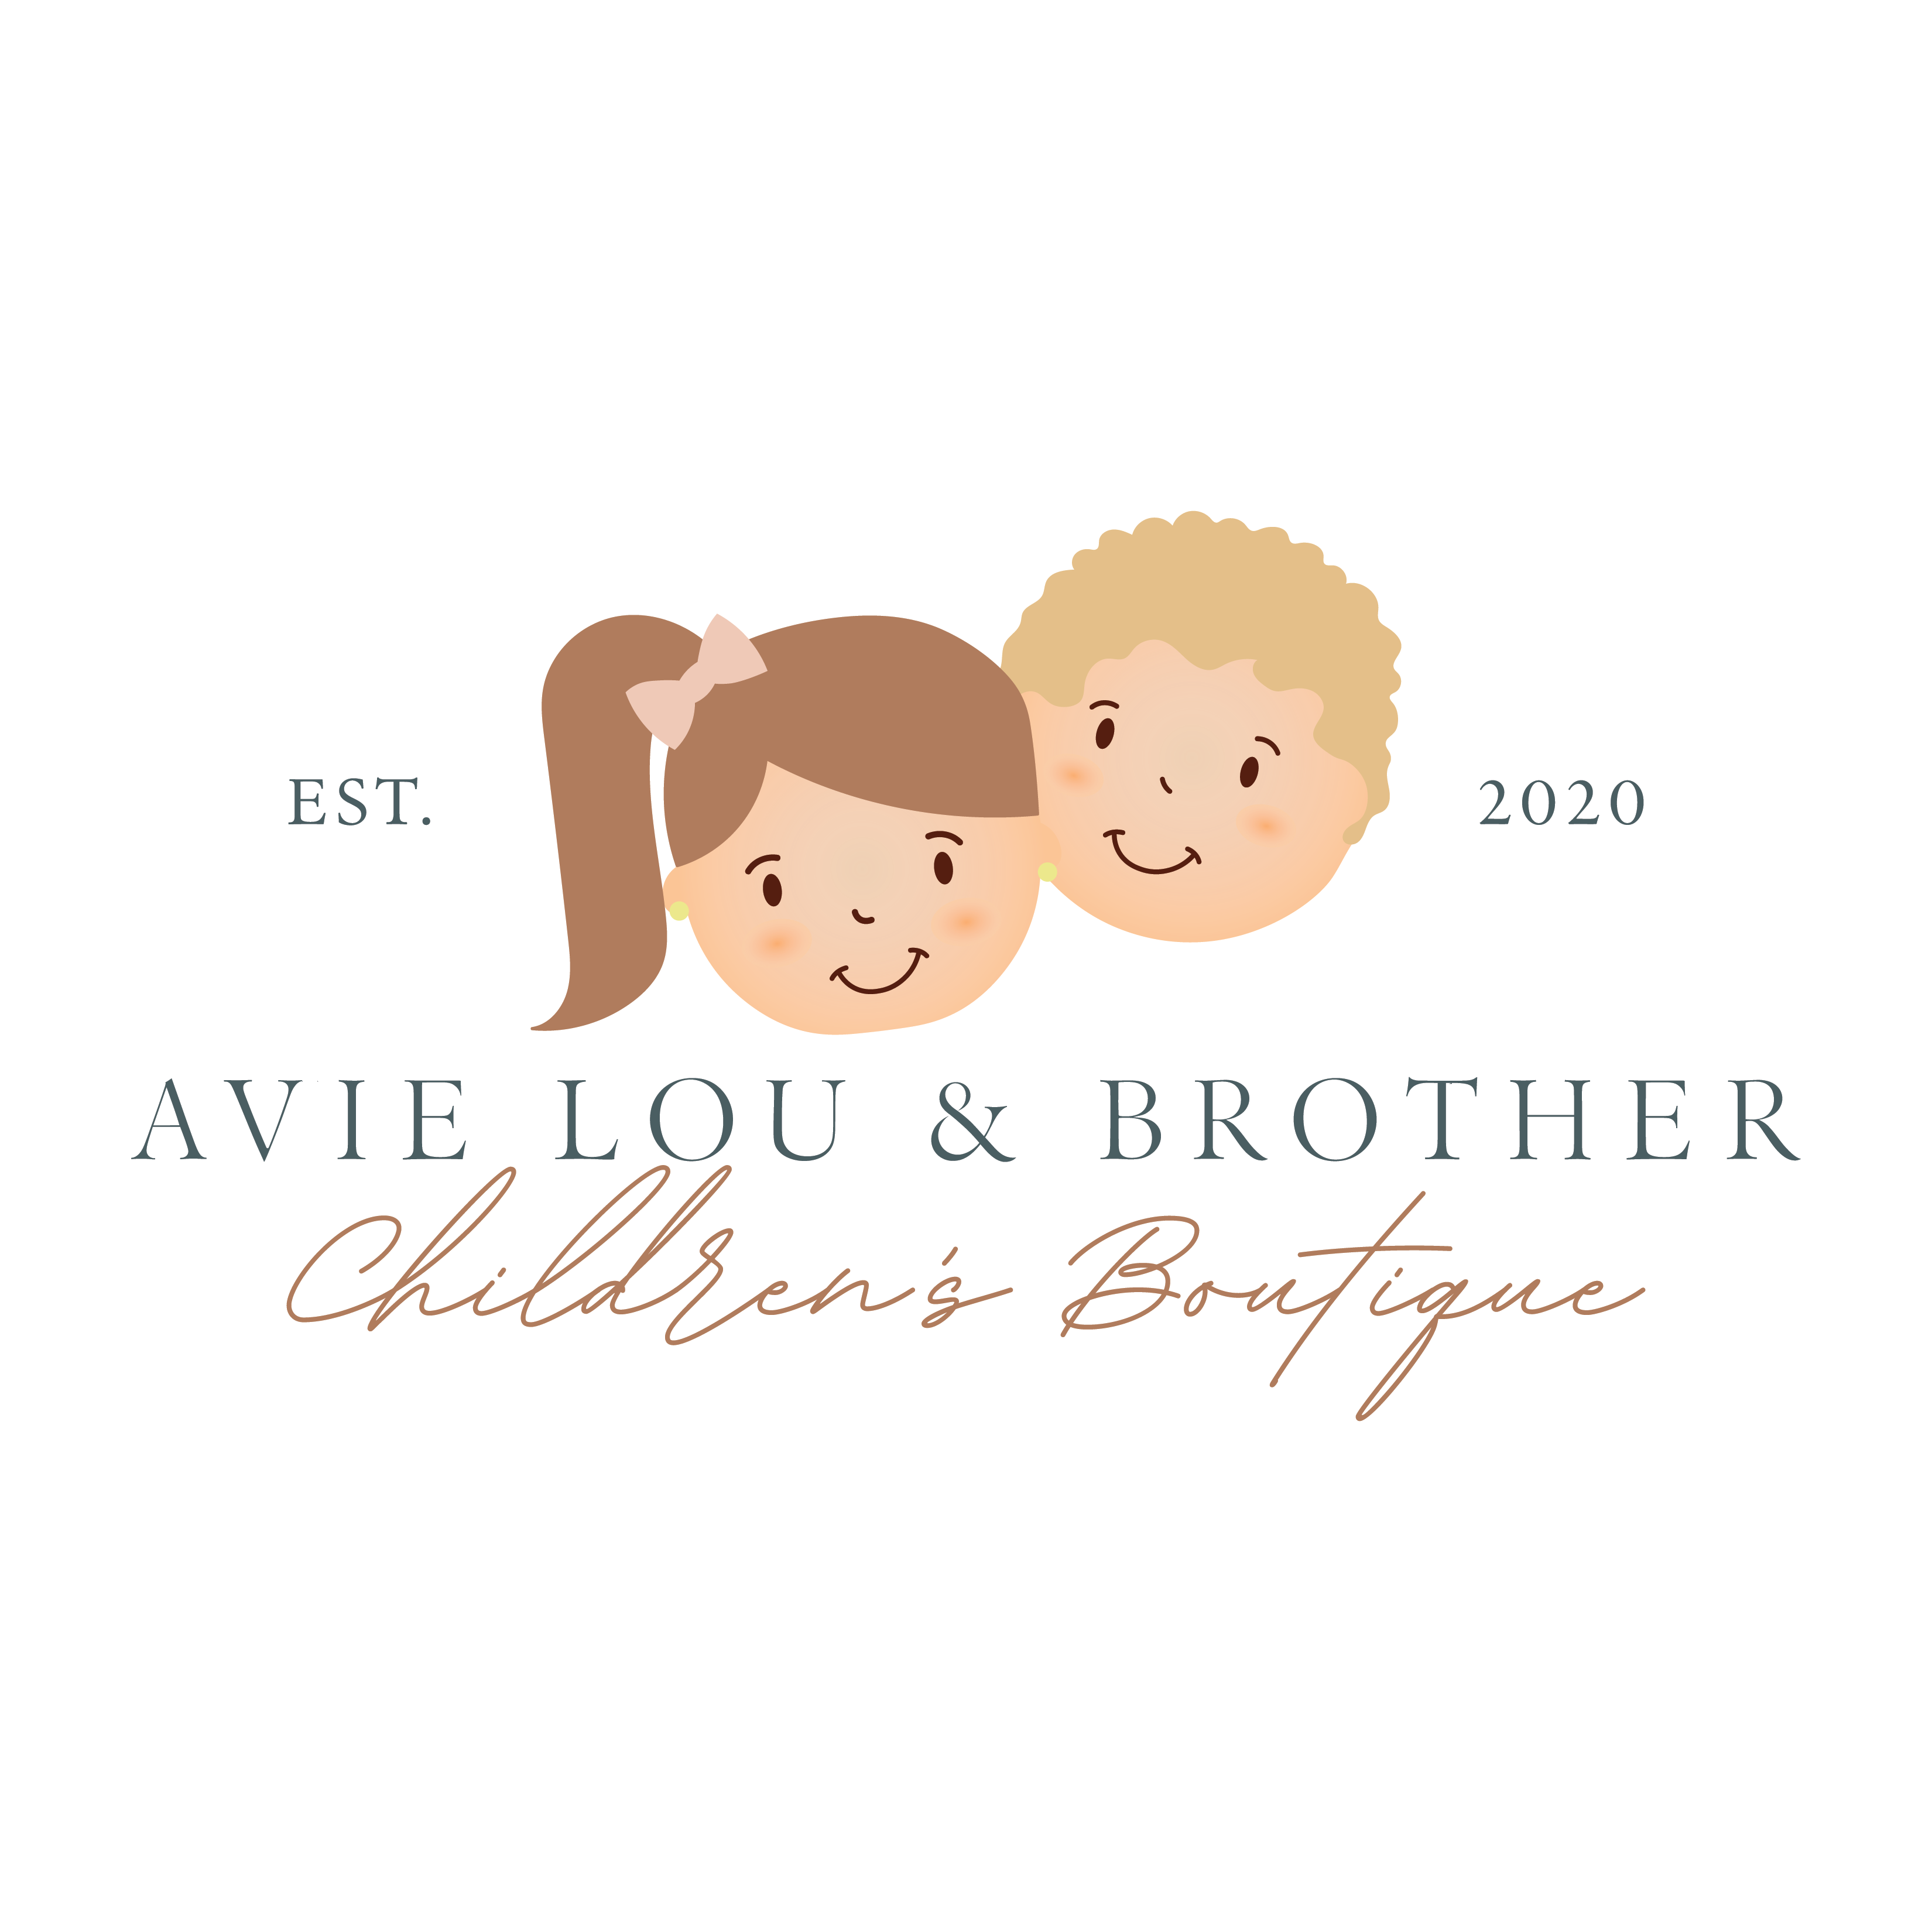 Avie Lou & Brother